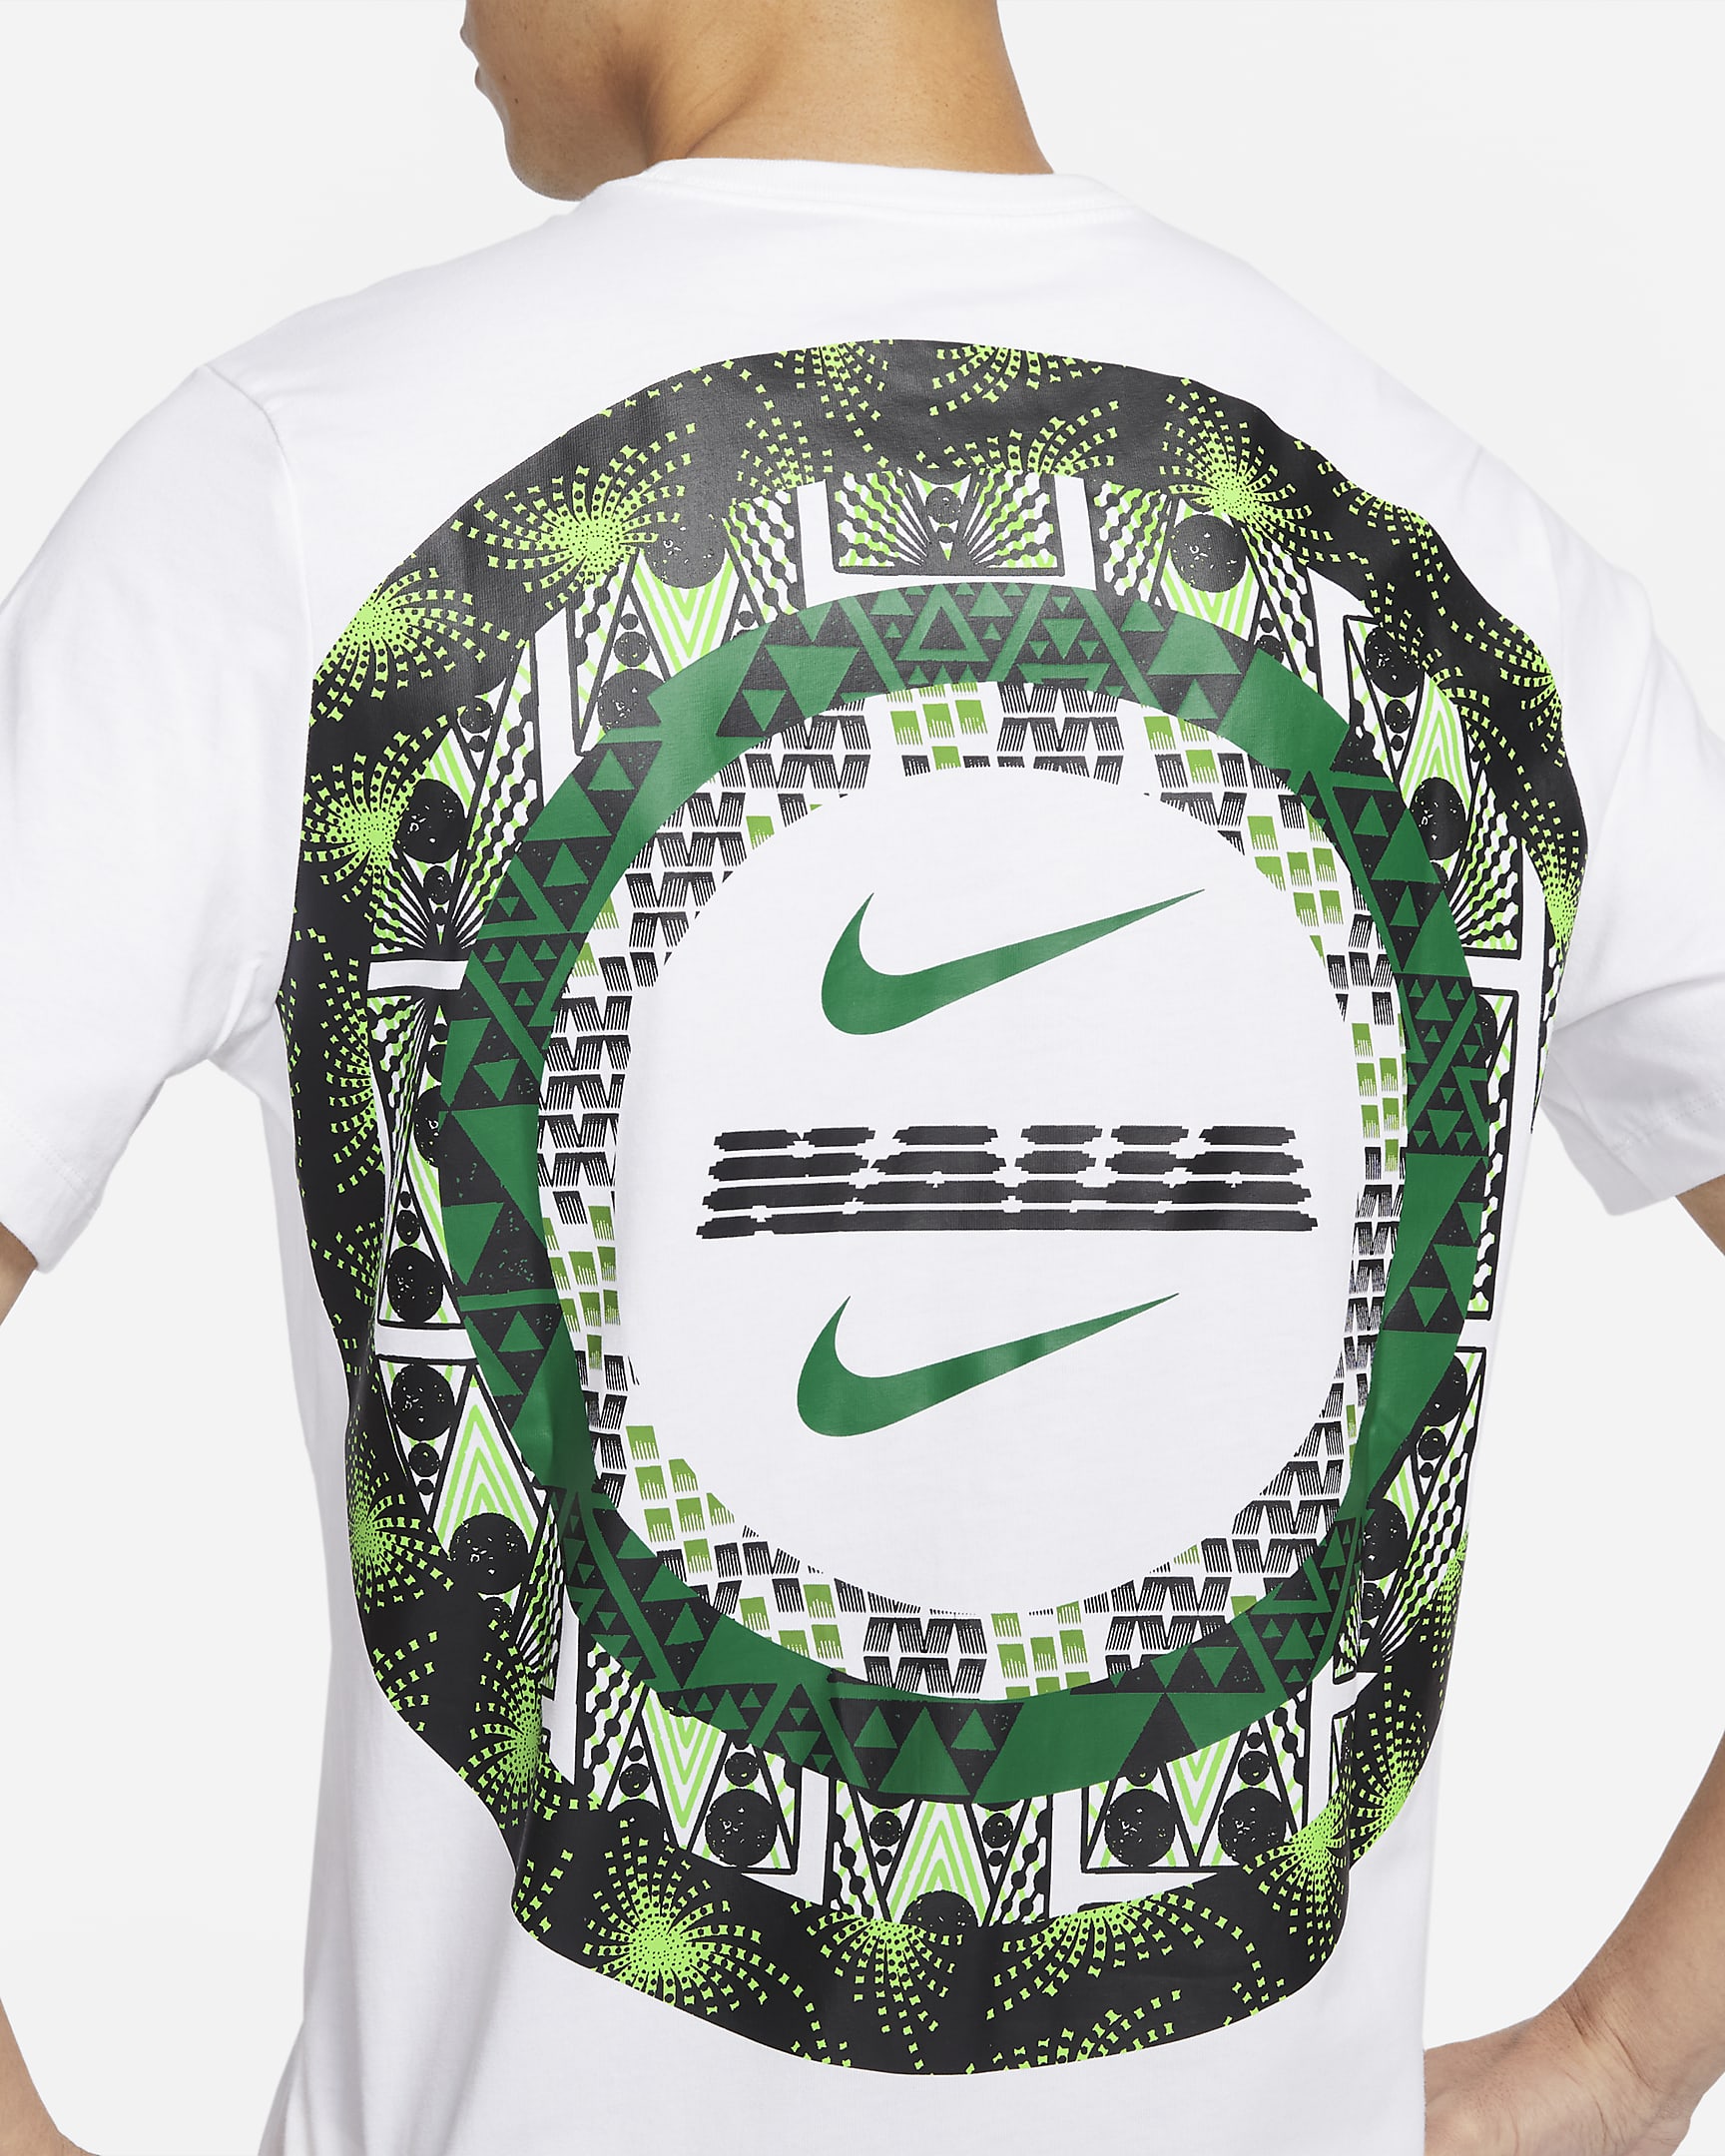 Nigeria Men's Nike Voice T-Shirt - White